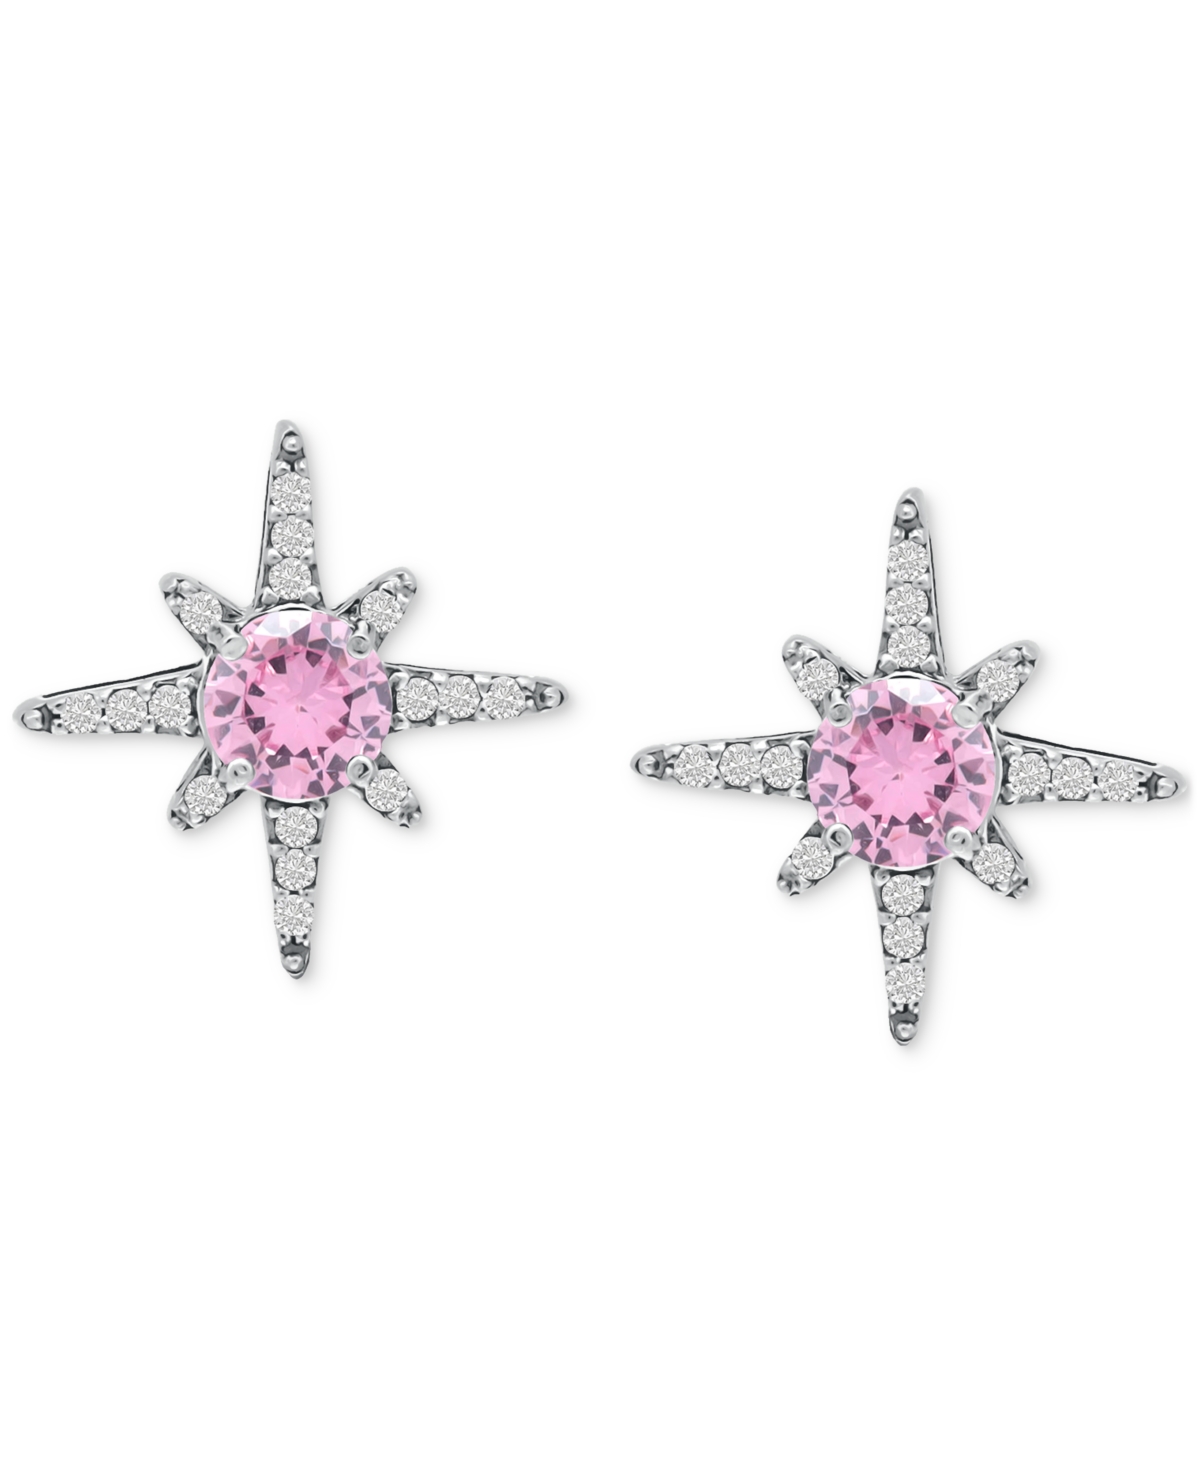 Giani Bernini Cubic Zirconia Celestial Star Stud Earrings In Sterling Silver, Created For Macy's In Pink